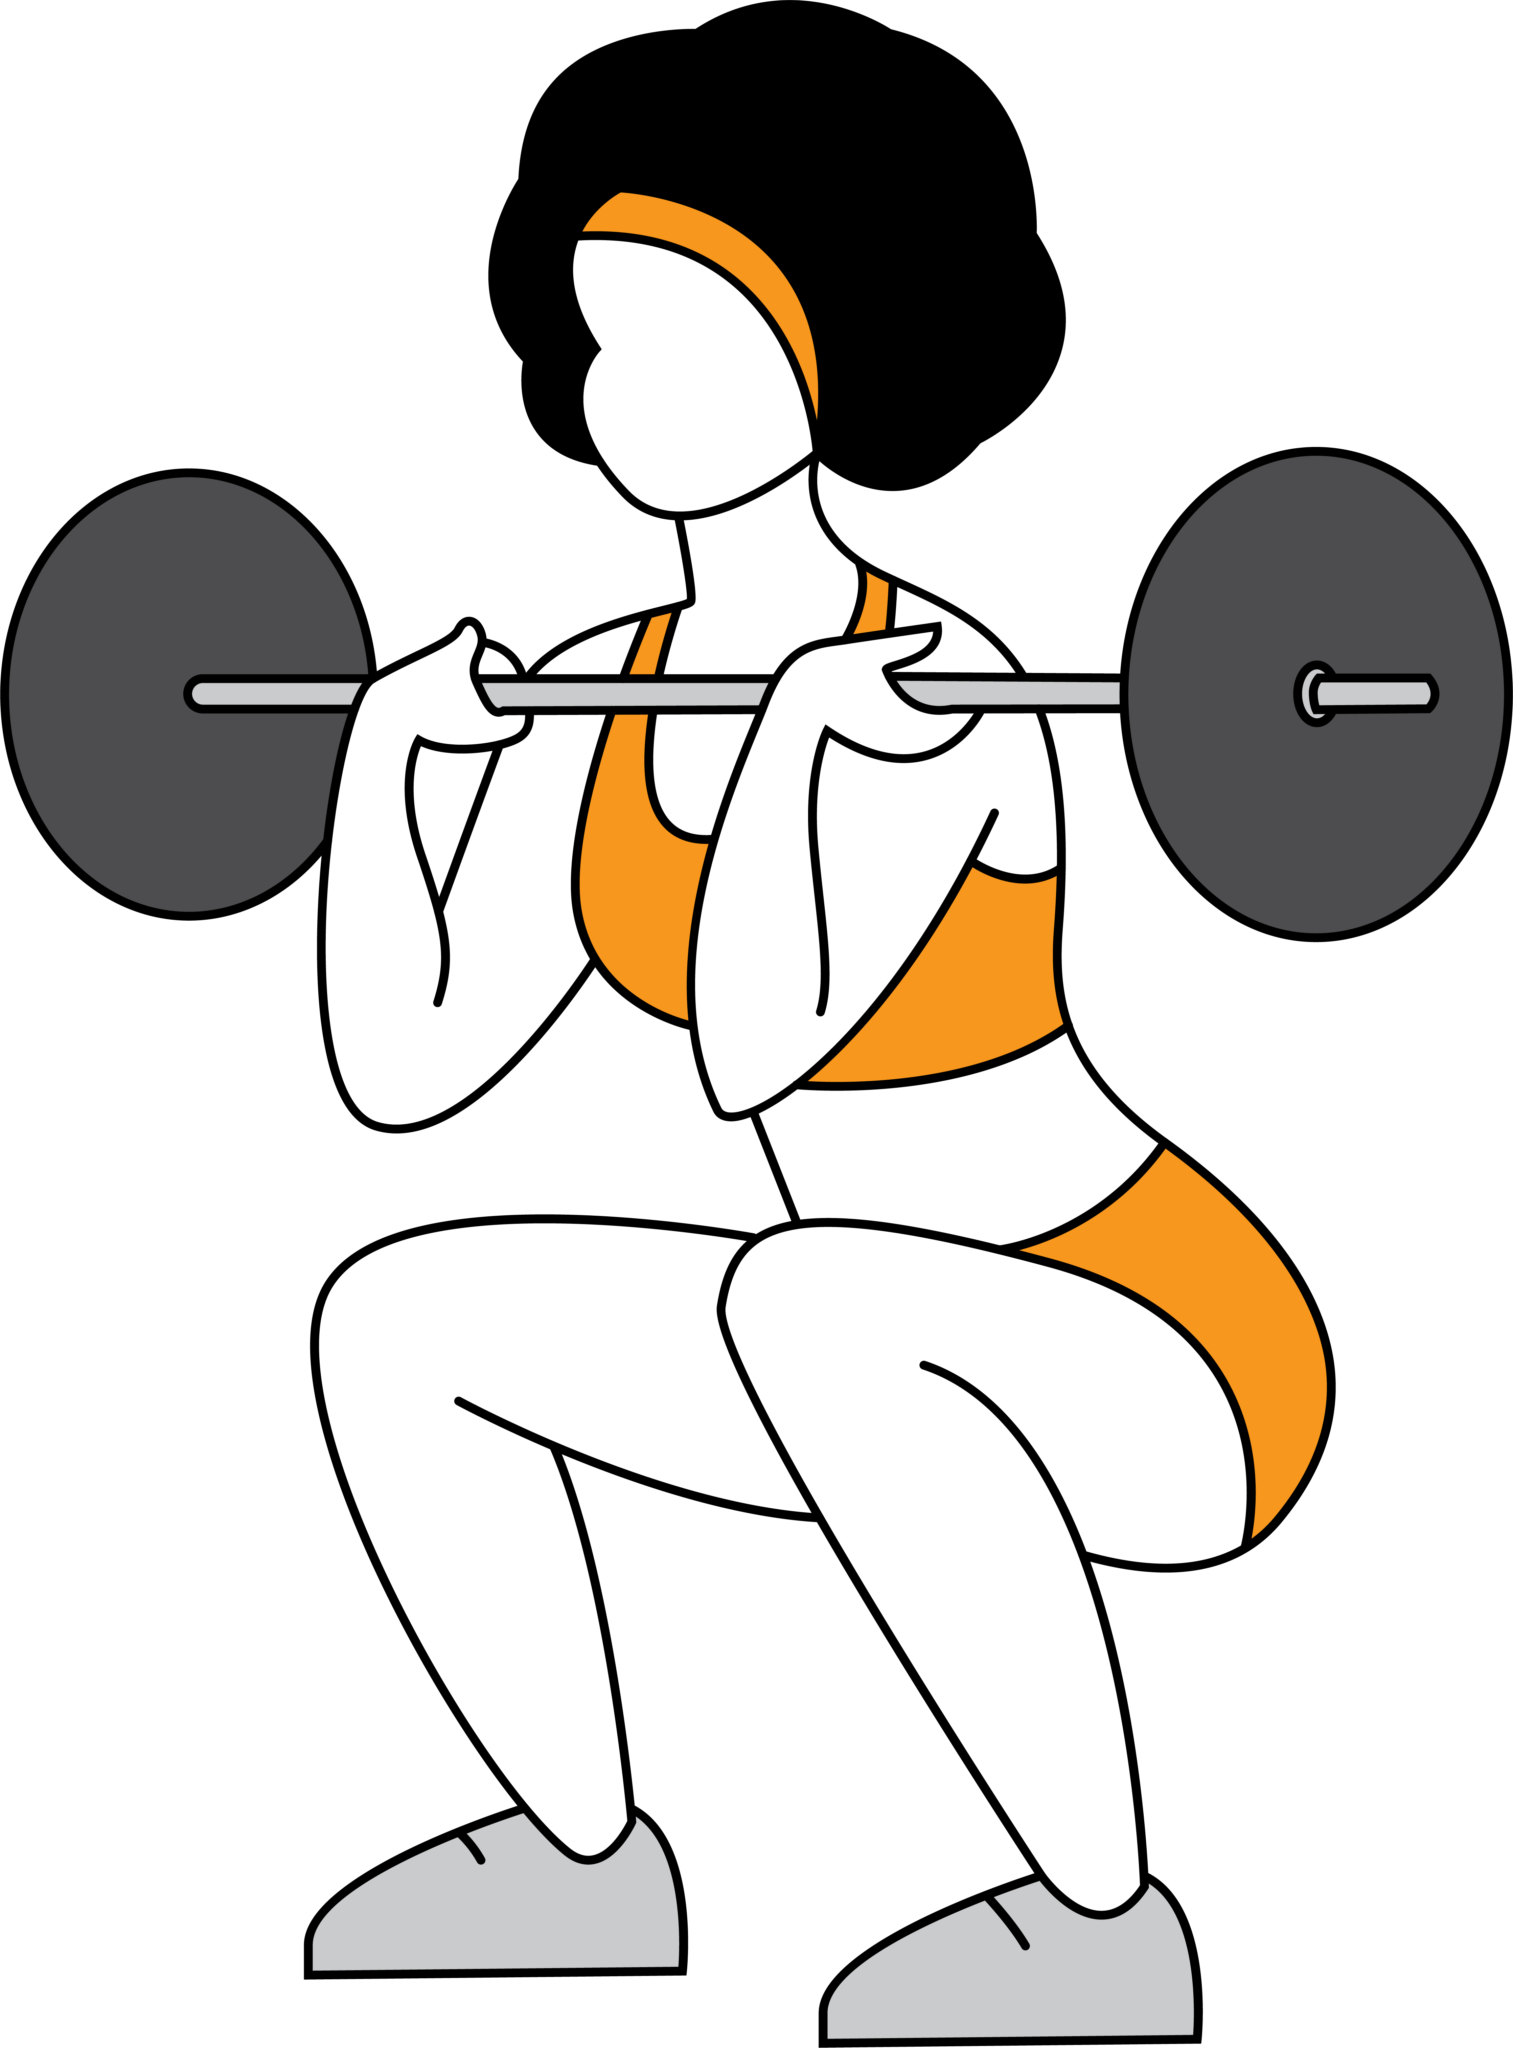 CrossFit Athlete icon